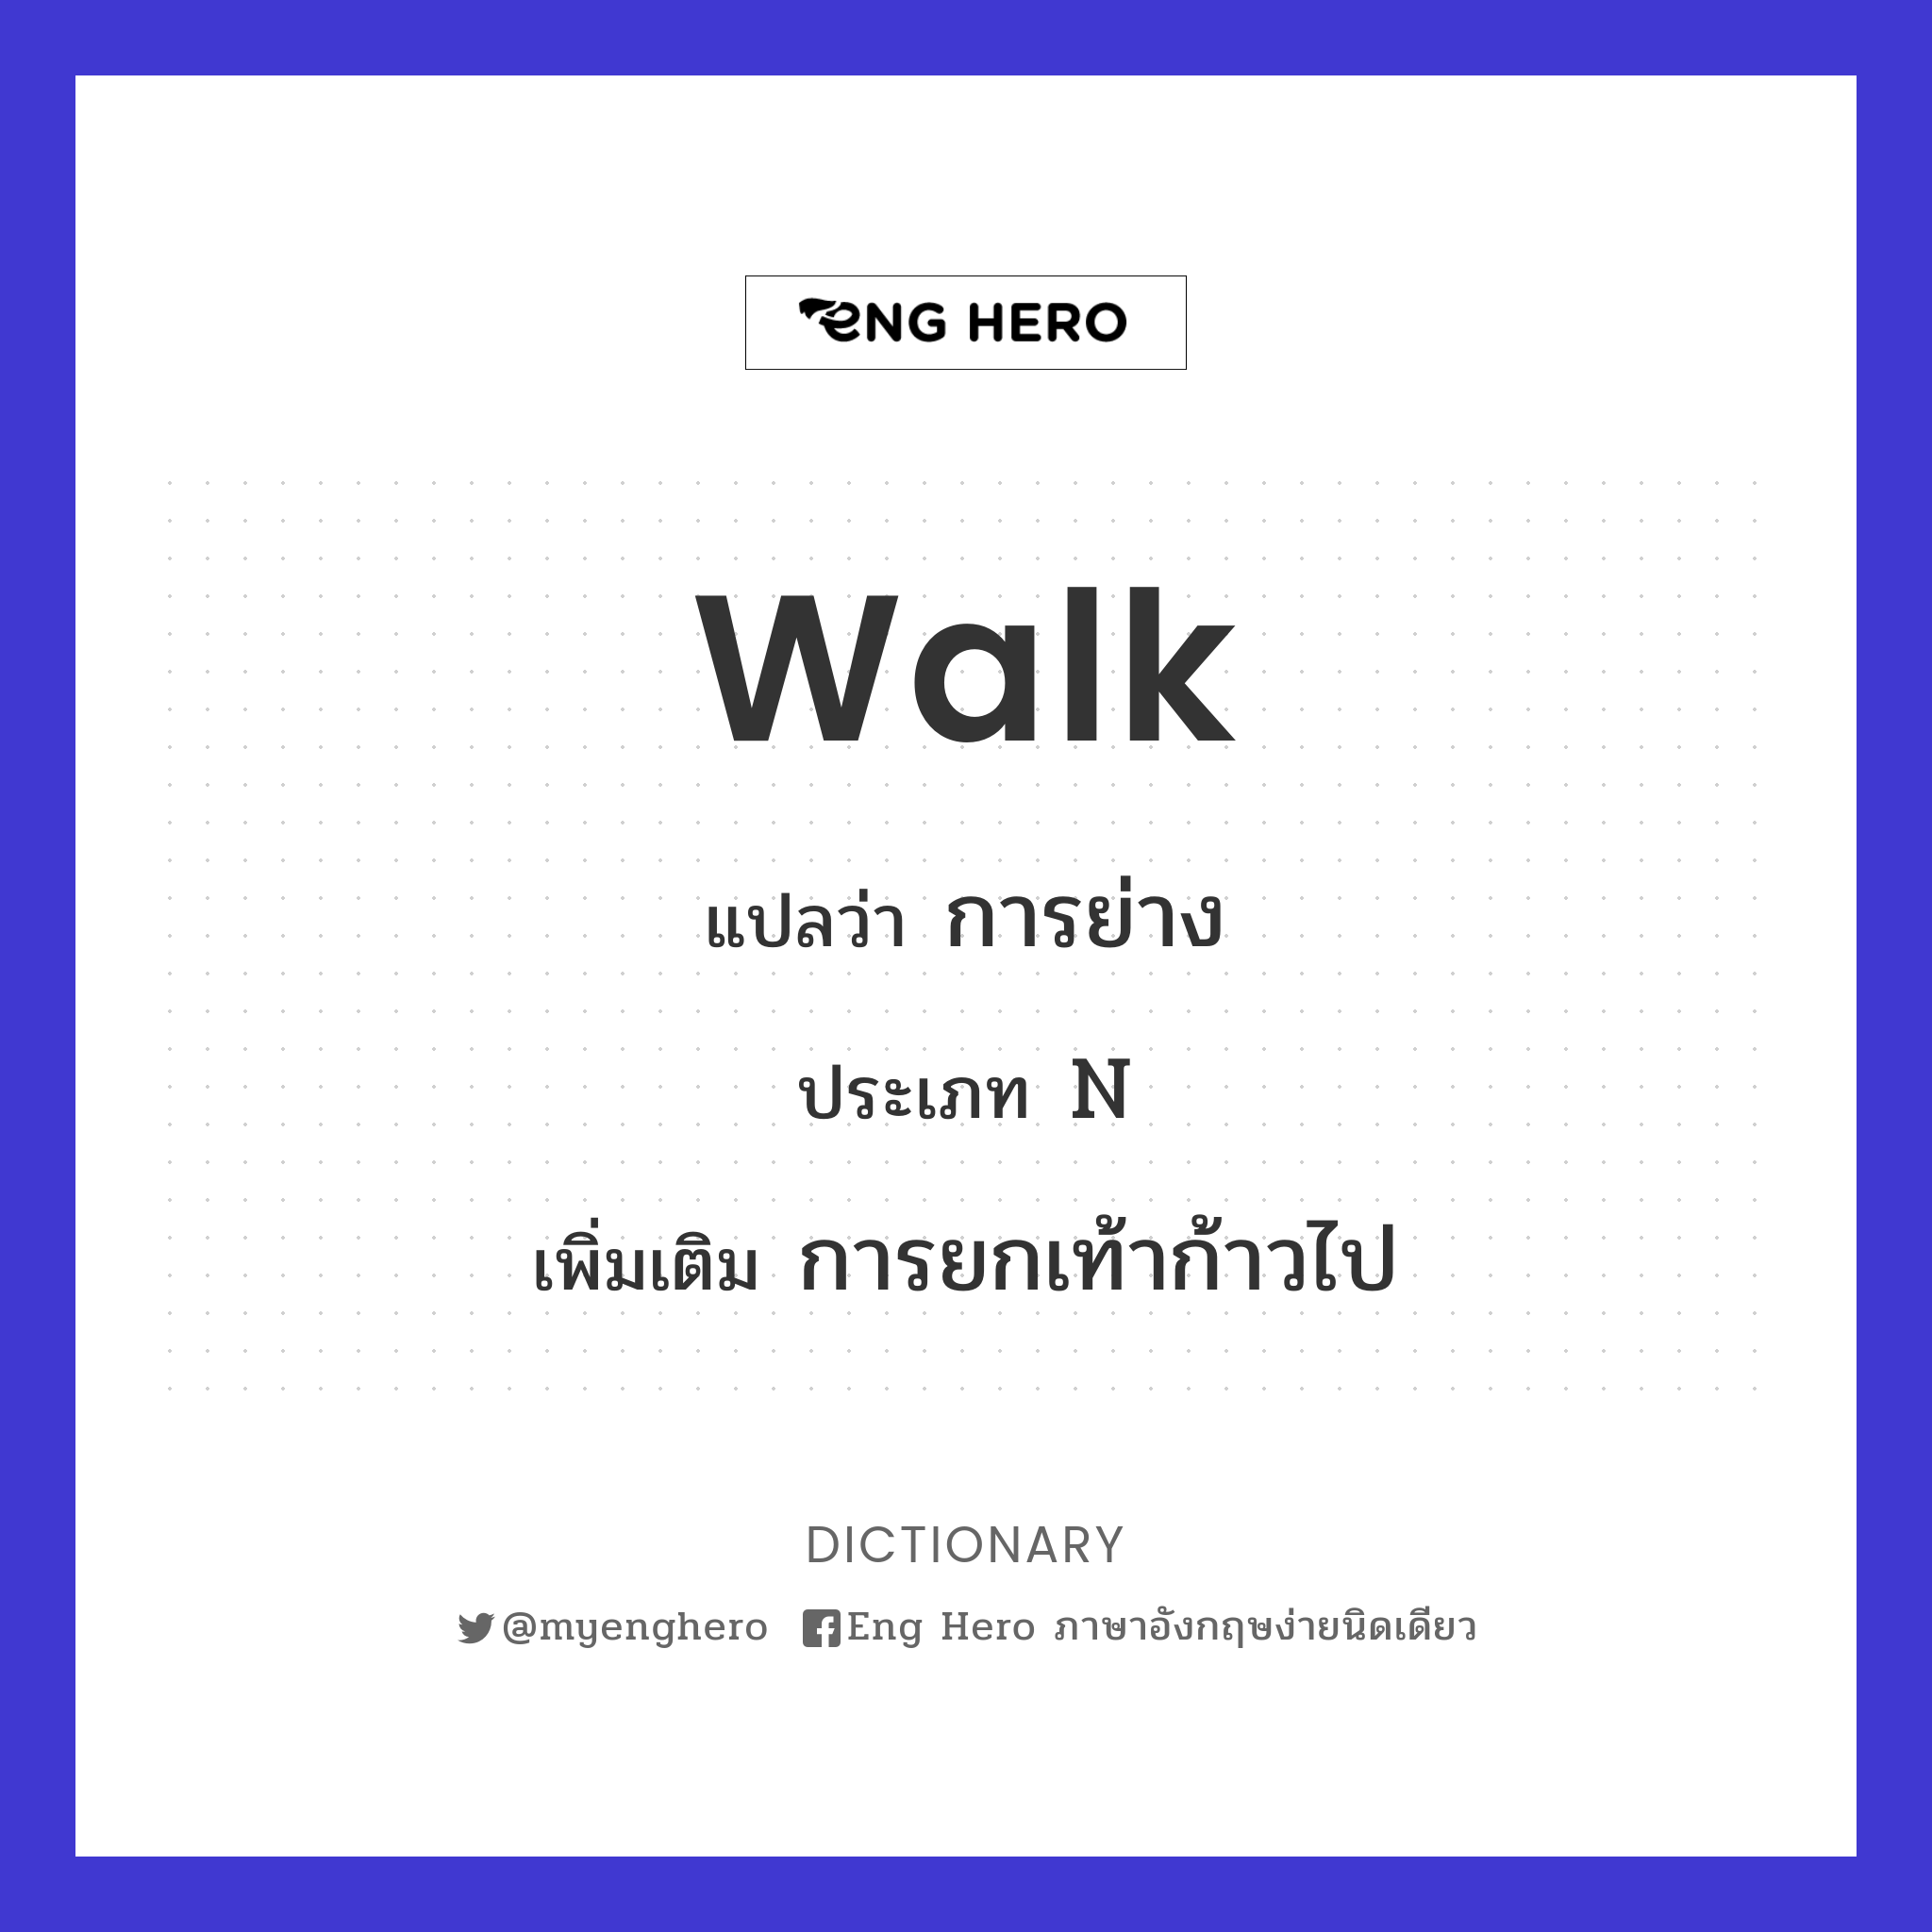 walk